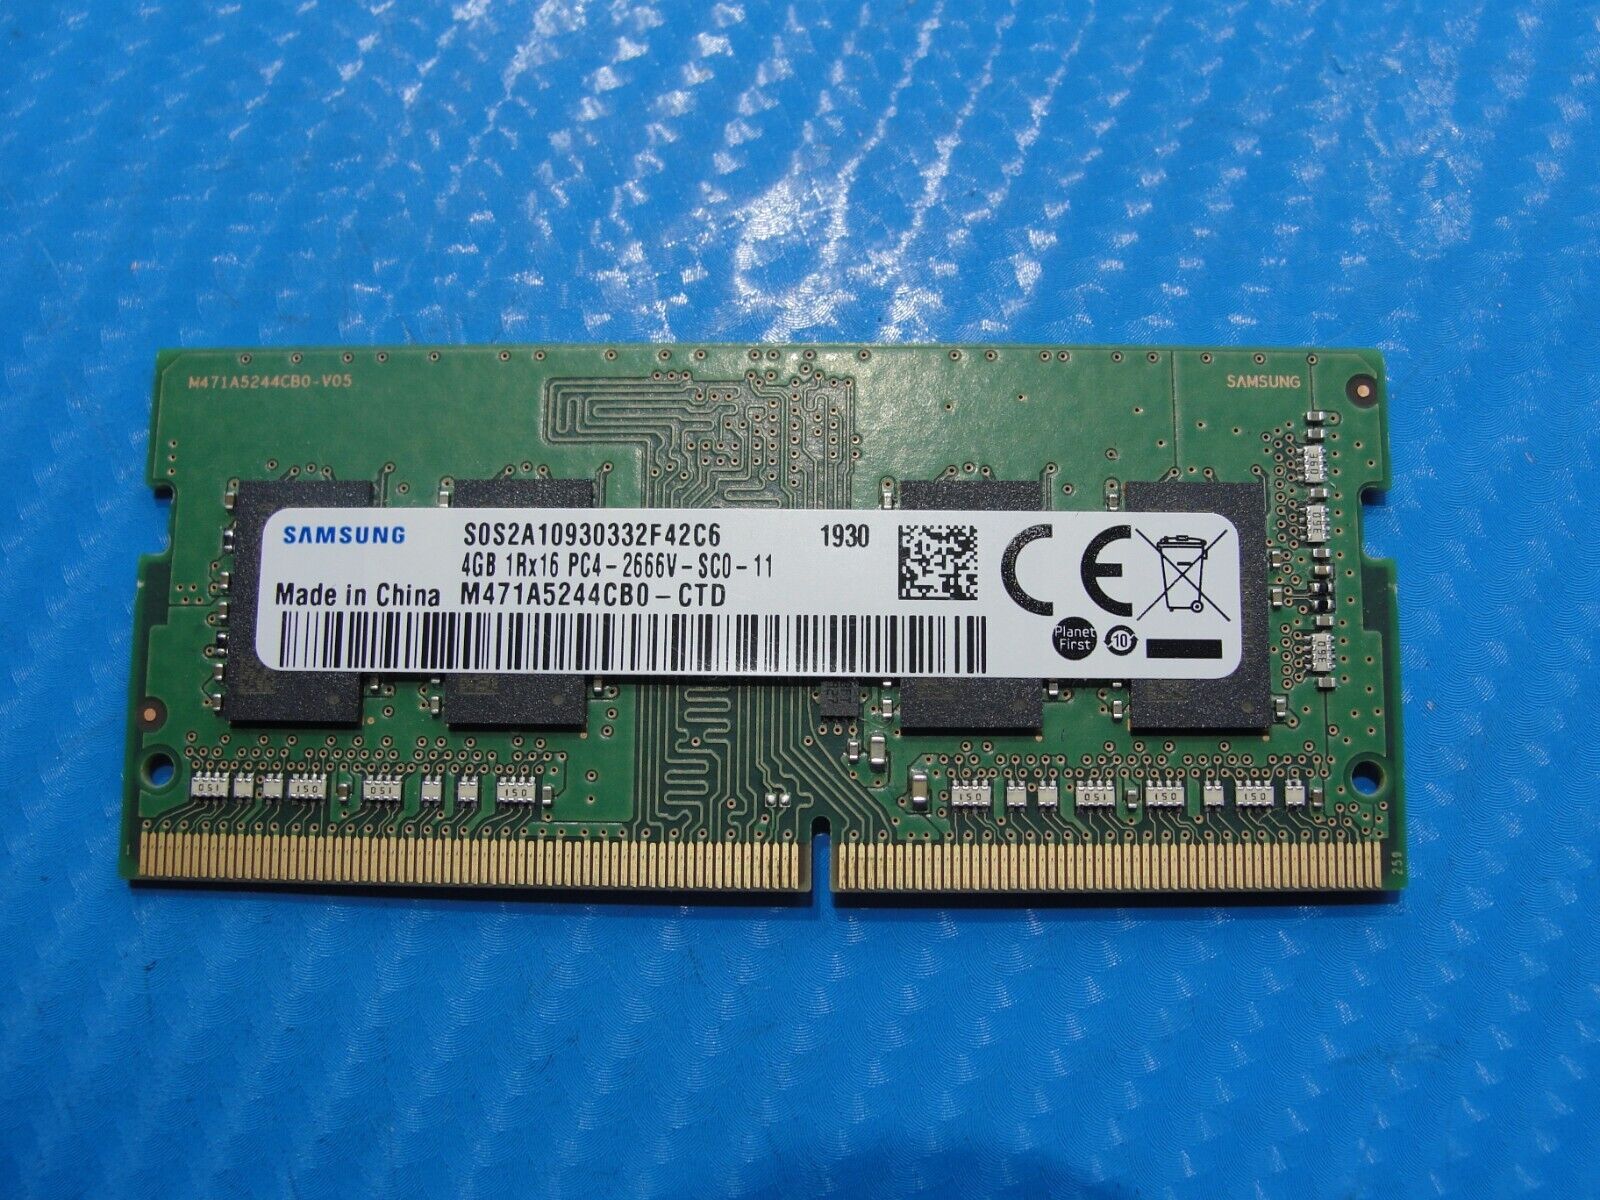 Acer A515-43-R19L So-Dimm Samsung 4Gb 1Rx16 Memory PC4-2666V M471A5244CB0-CTD